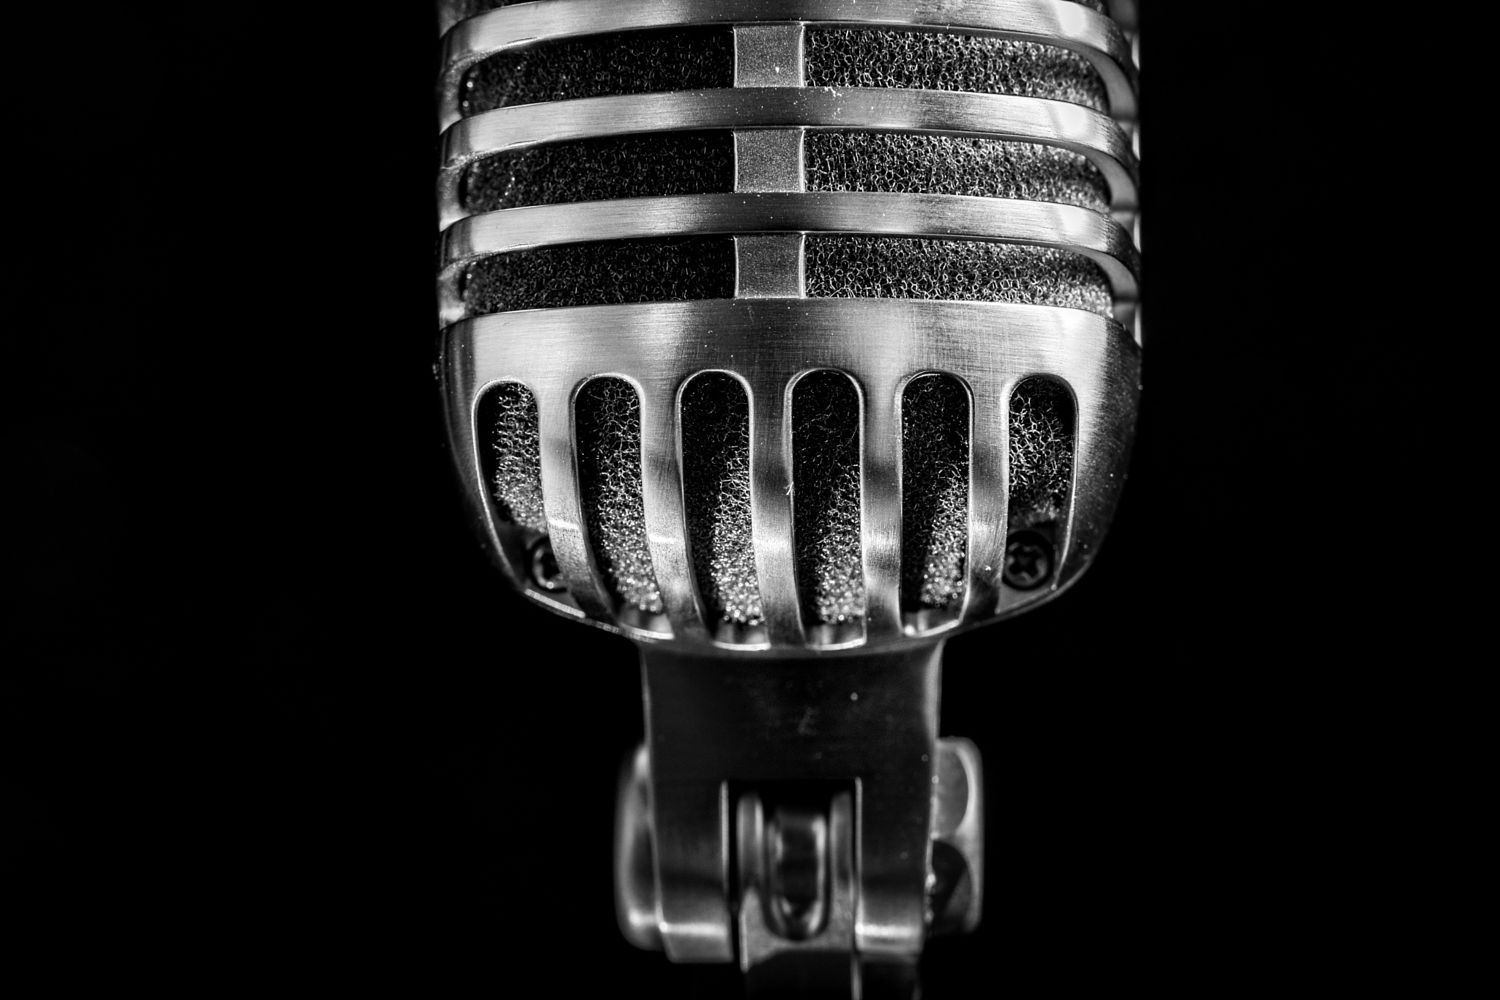 Vintage microphone on black background